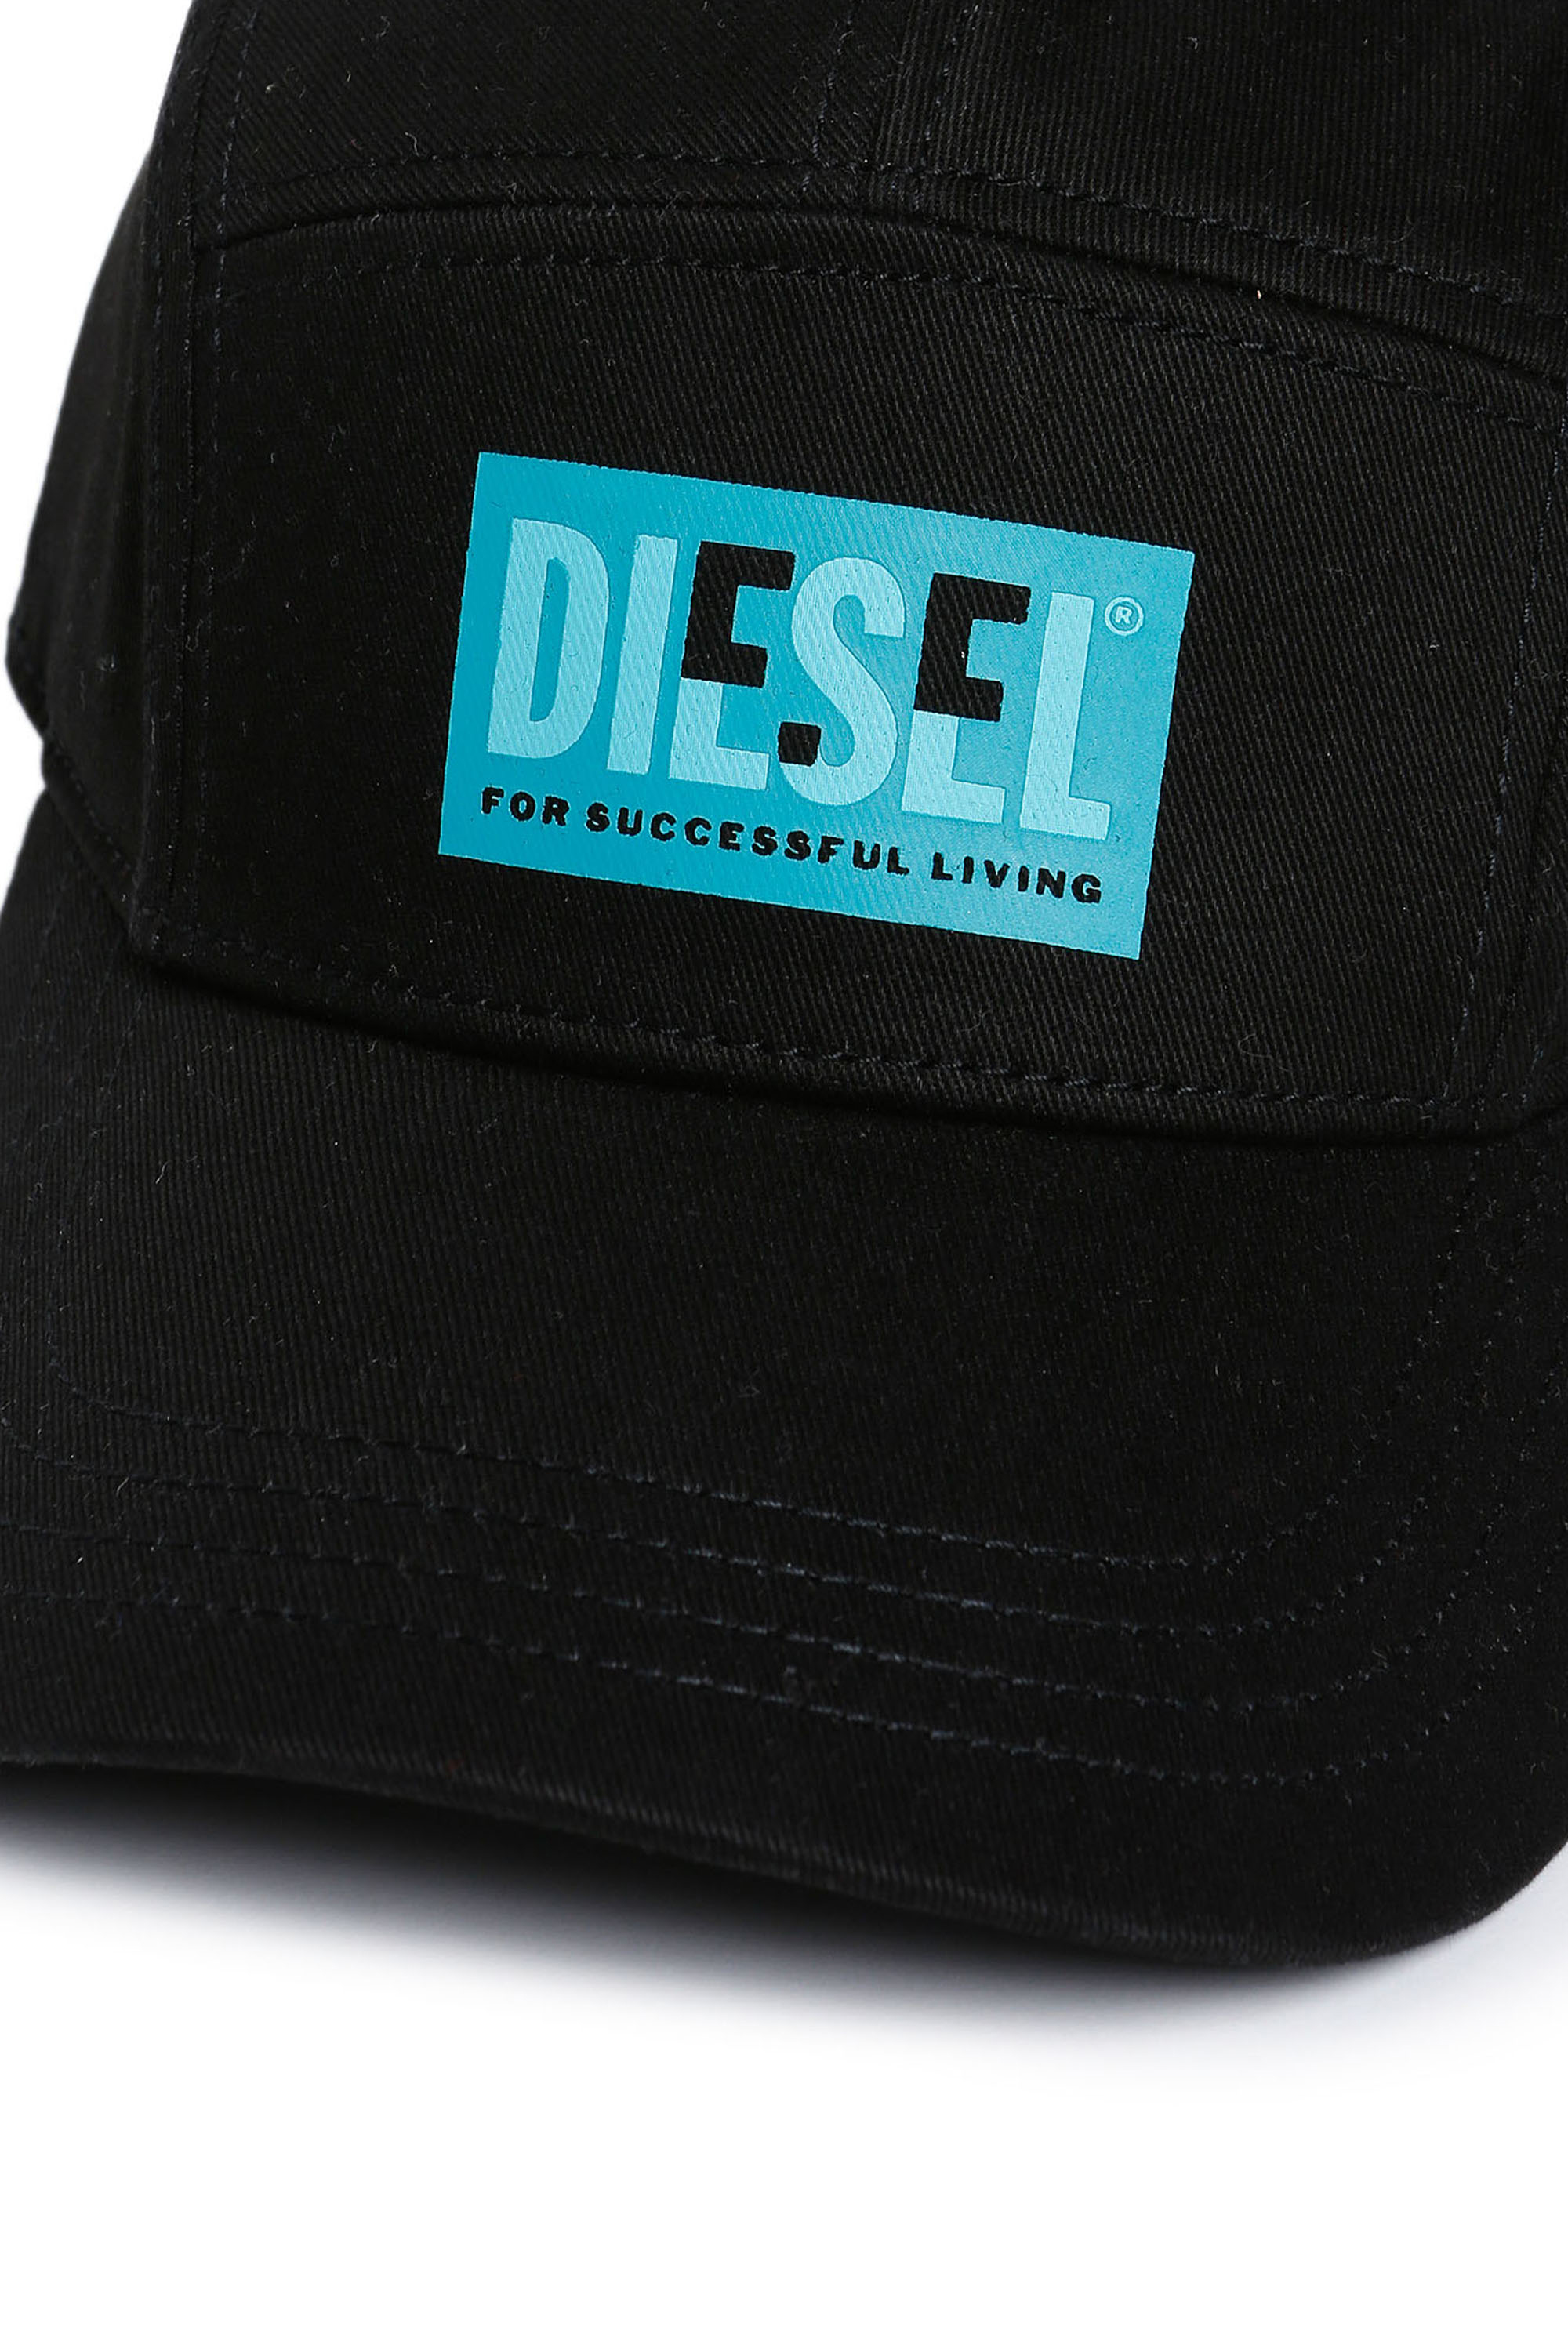 Diesel - FSMILL, Black - Image 3